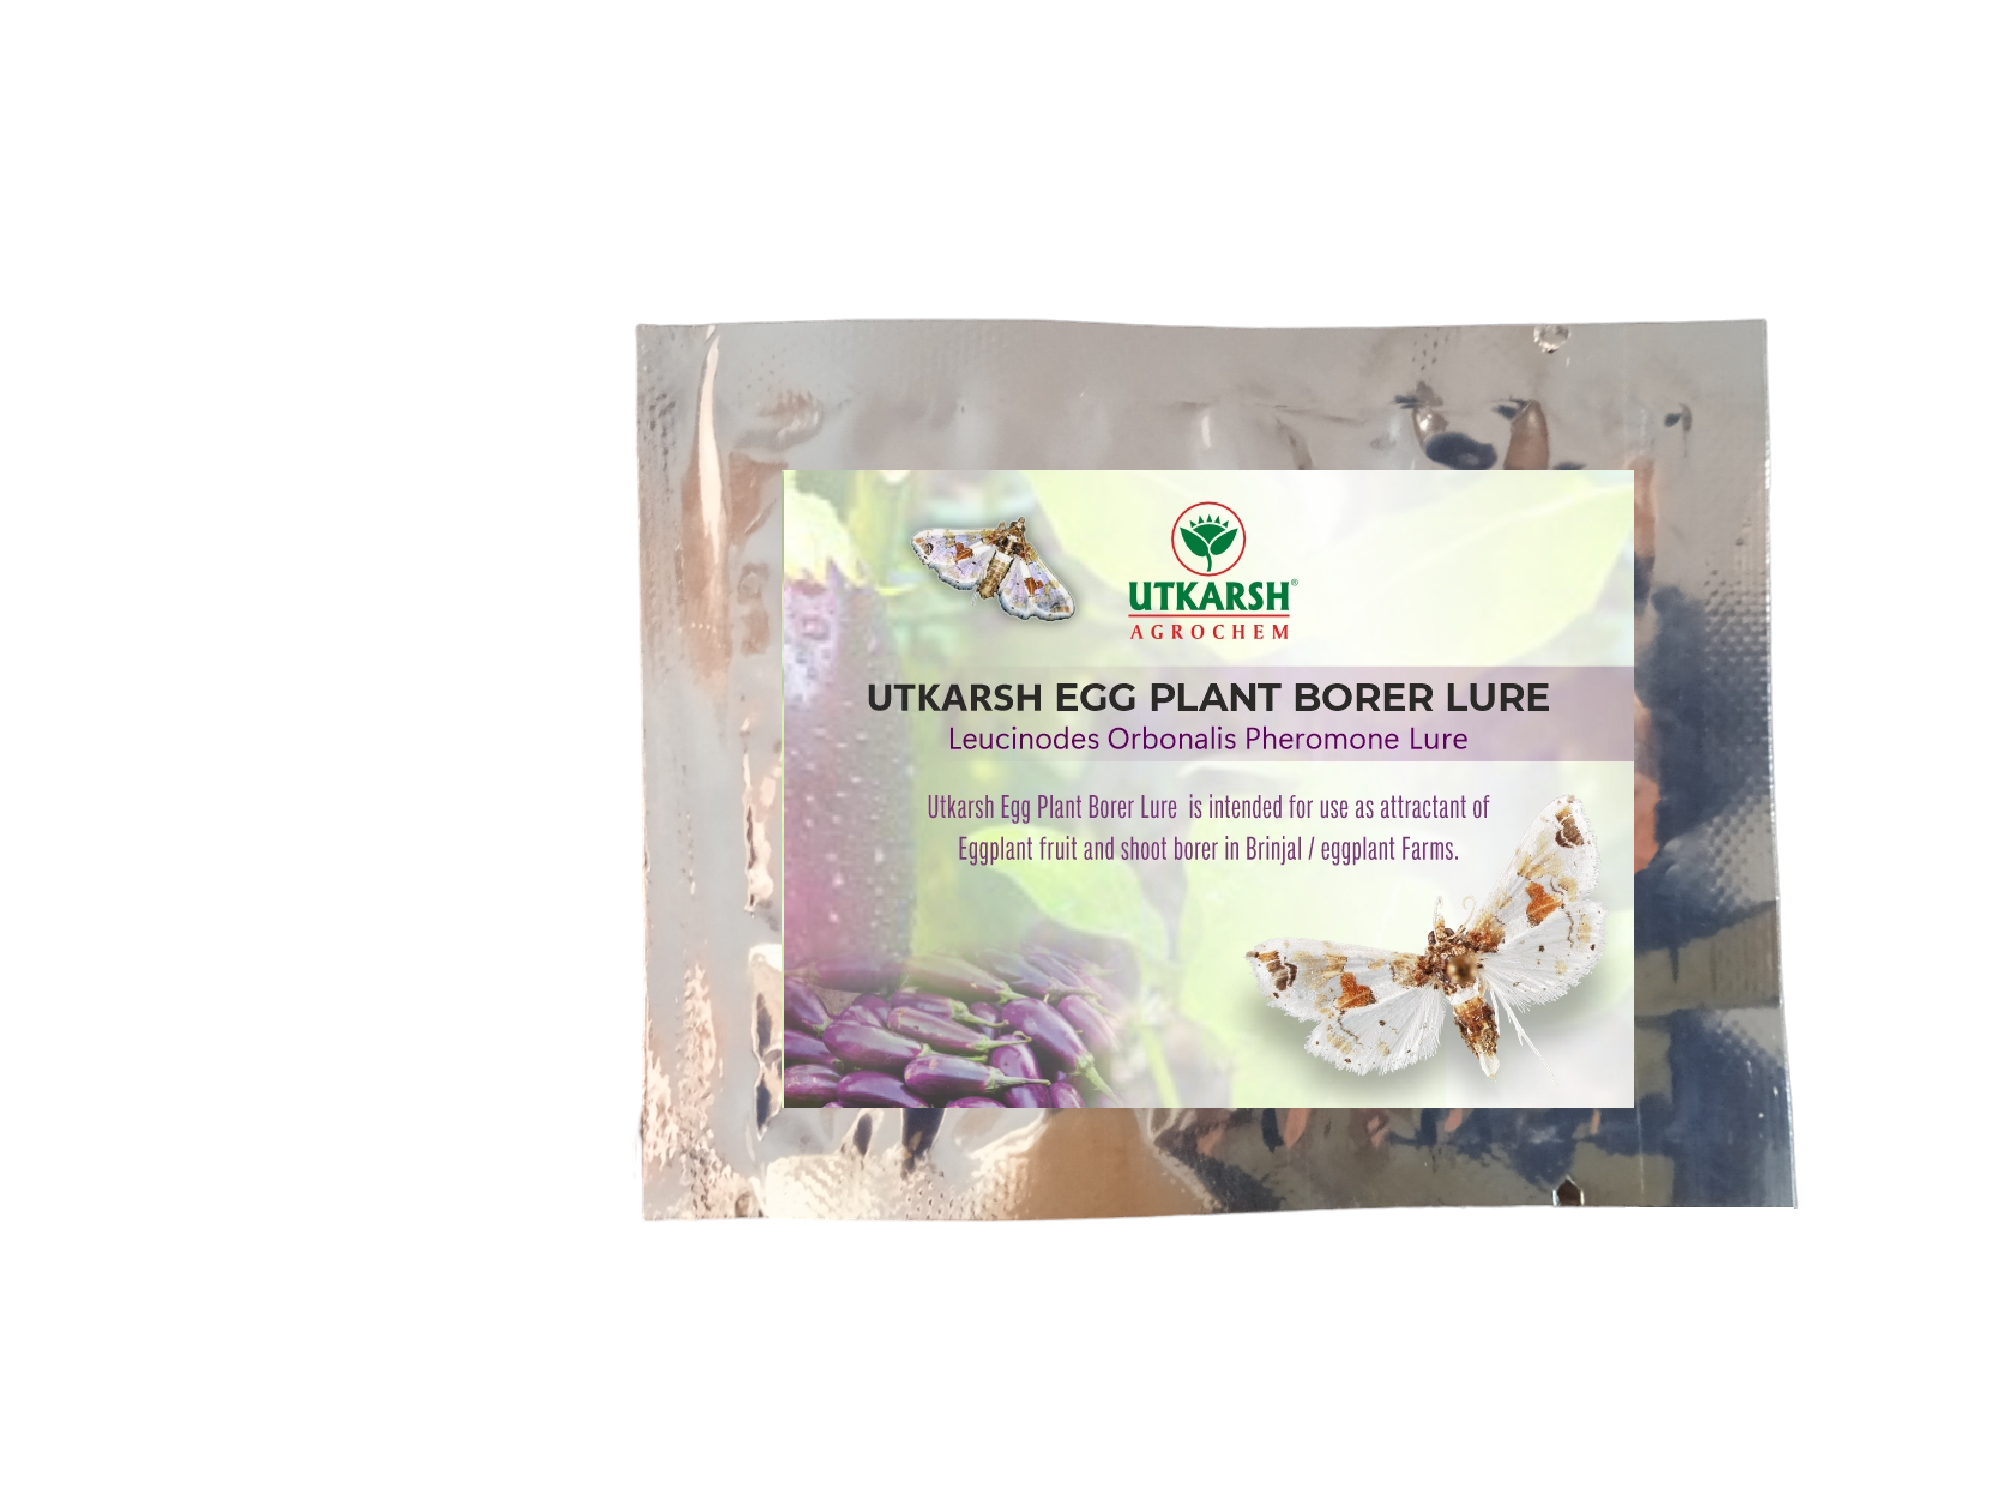 Utkarsh Egg Plant Borer Lure Leucinodes Orbonalis Pheromone Lure for Catching Insects/Moth of Brinjal Fruit and Shoot Borer in Brinjal Plant